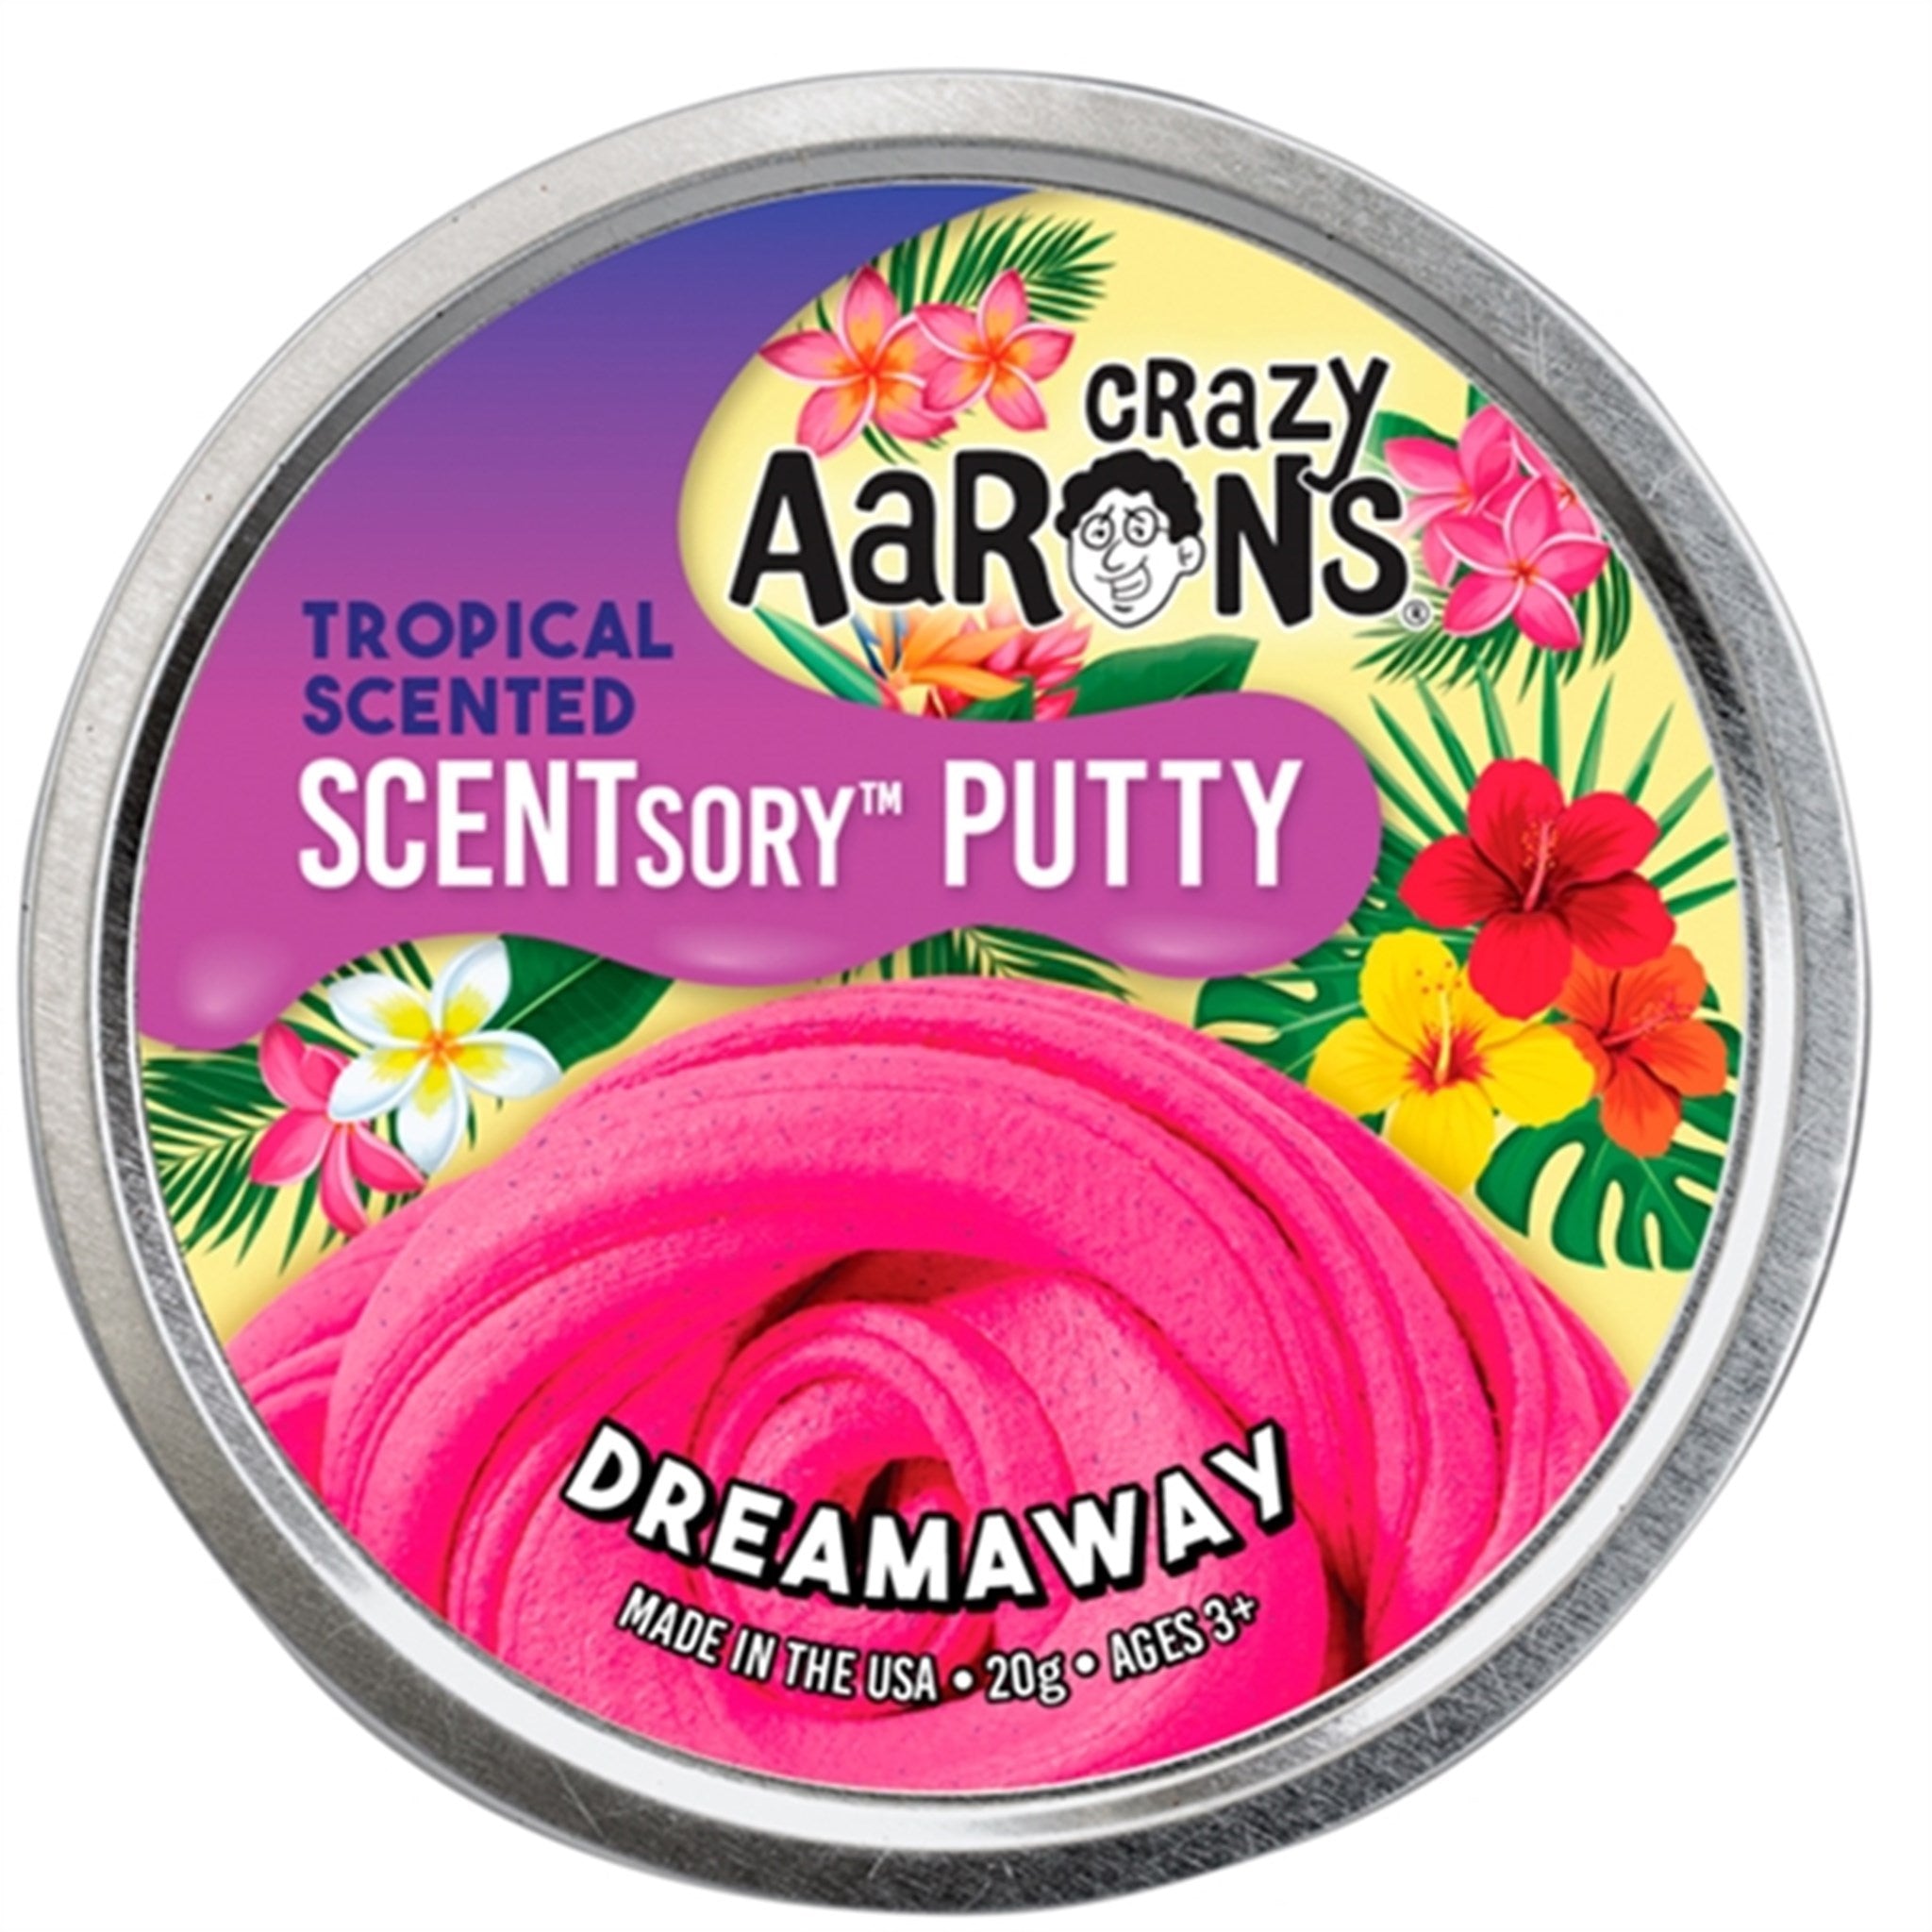 Crazy Aaron's® Scentsory Putty - Dreamaway